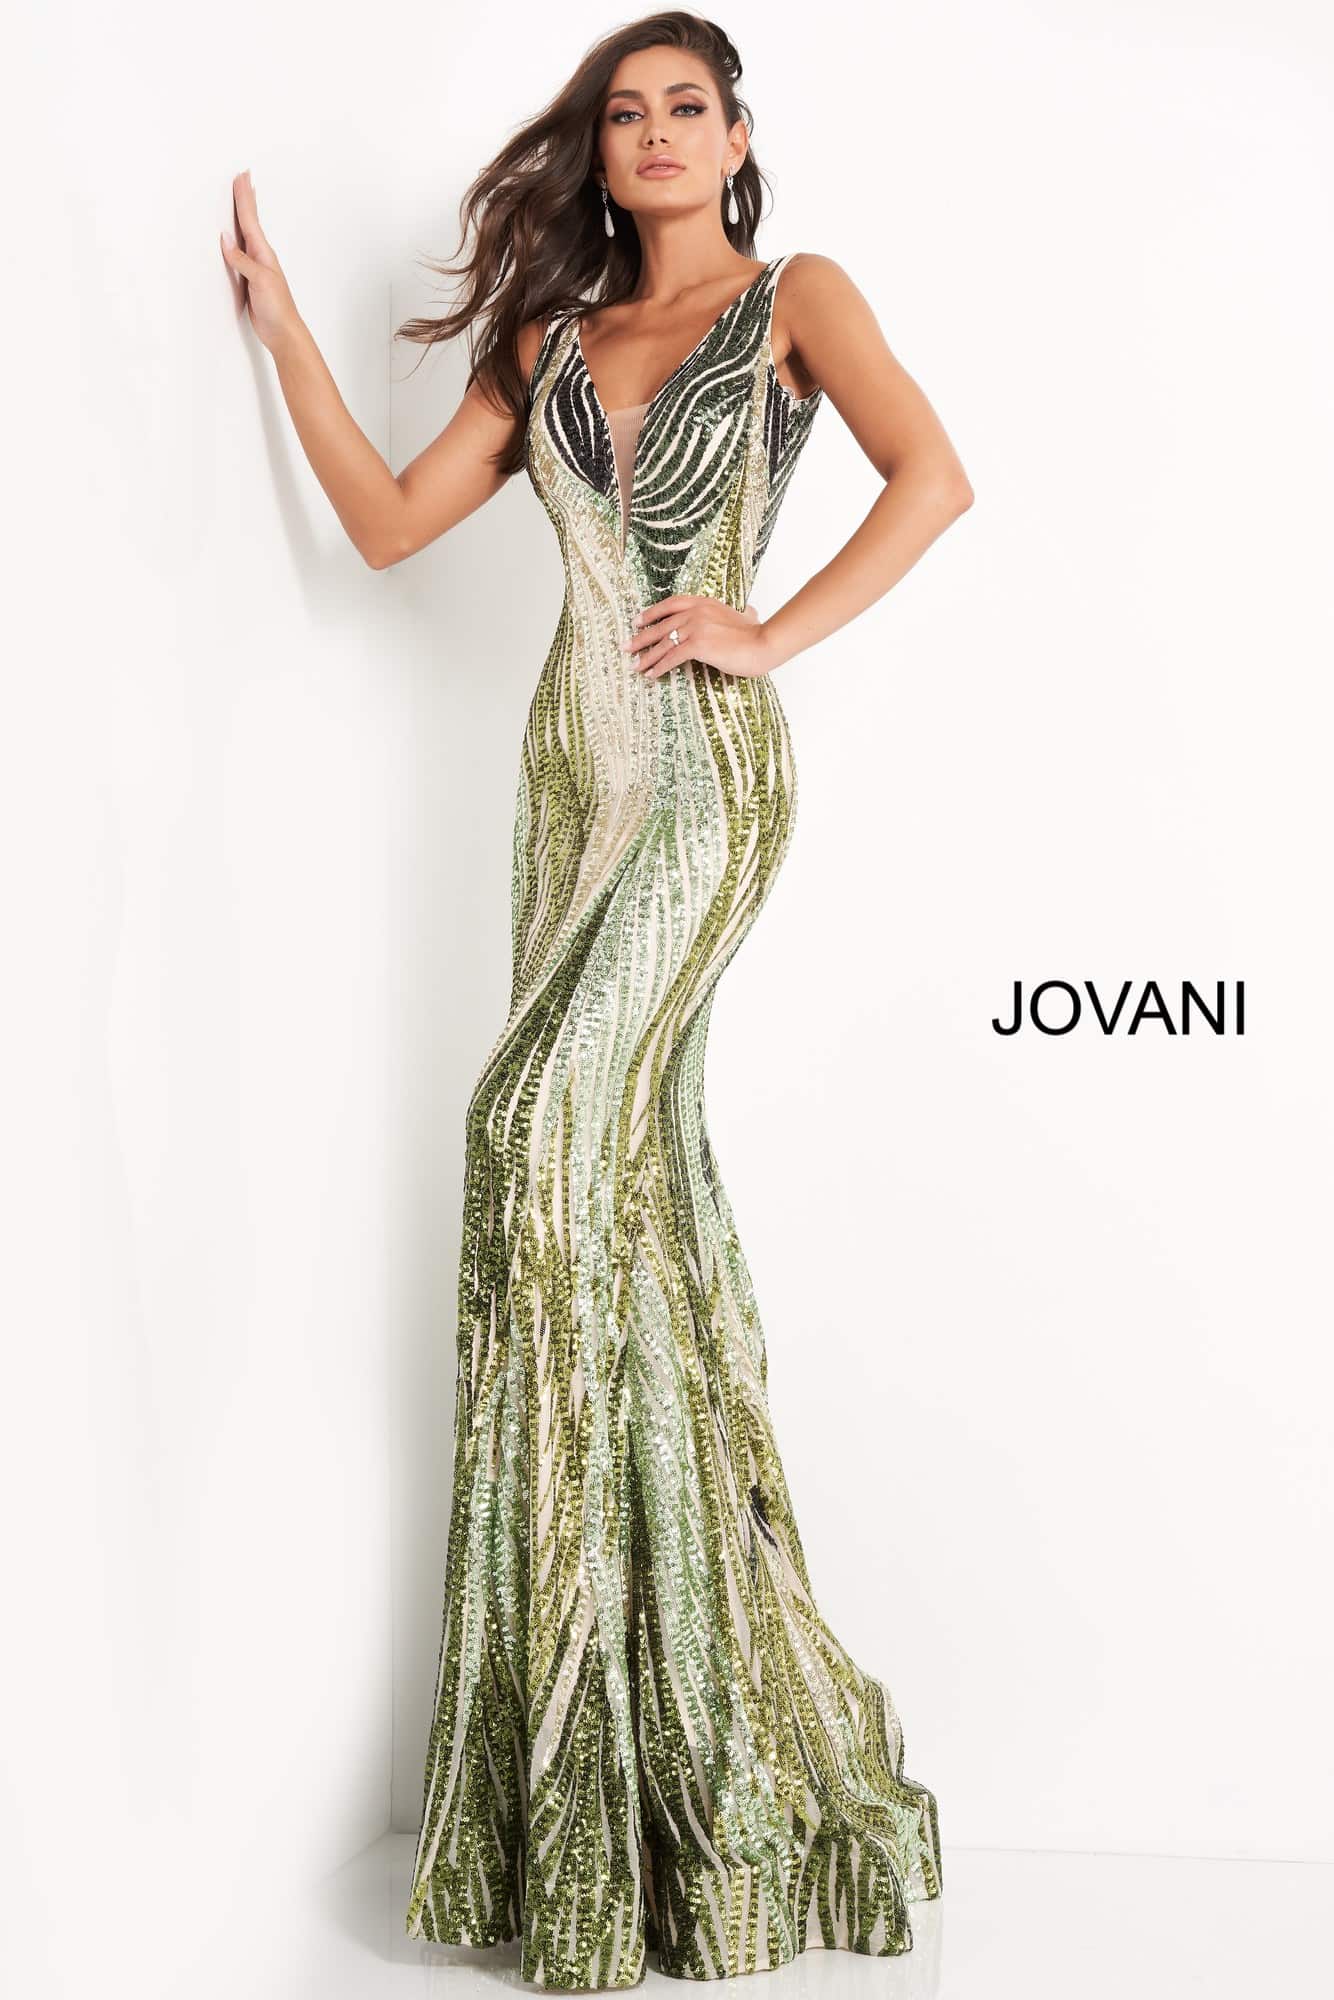 Jovani neon green dress | Dresses Images 2022